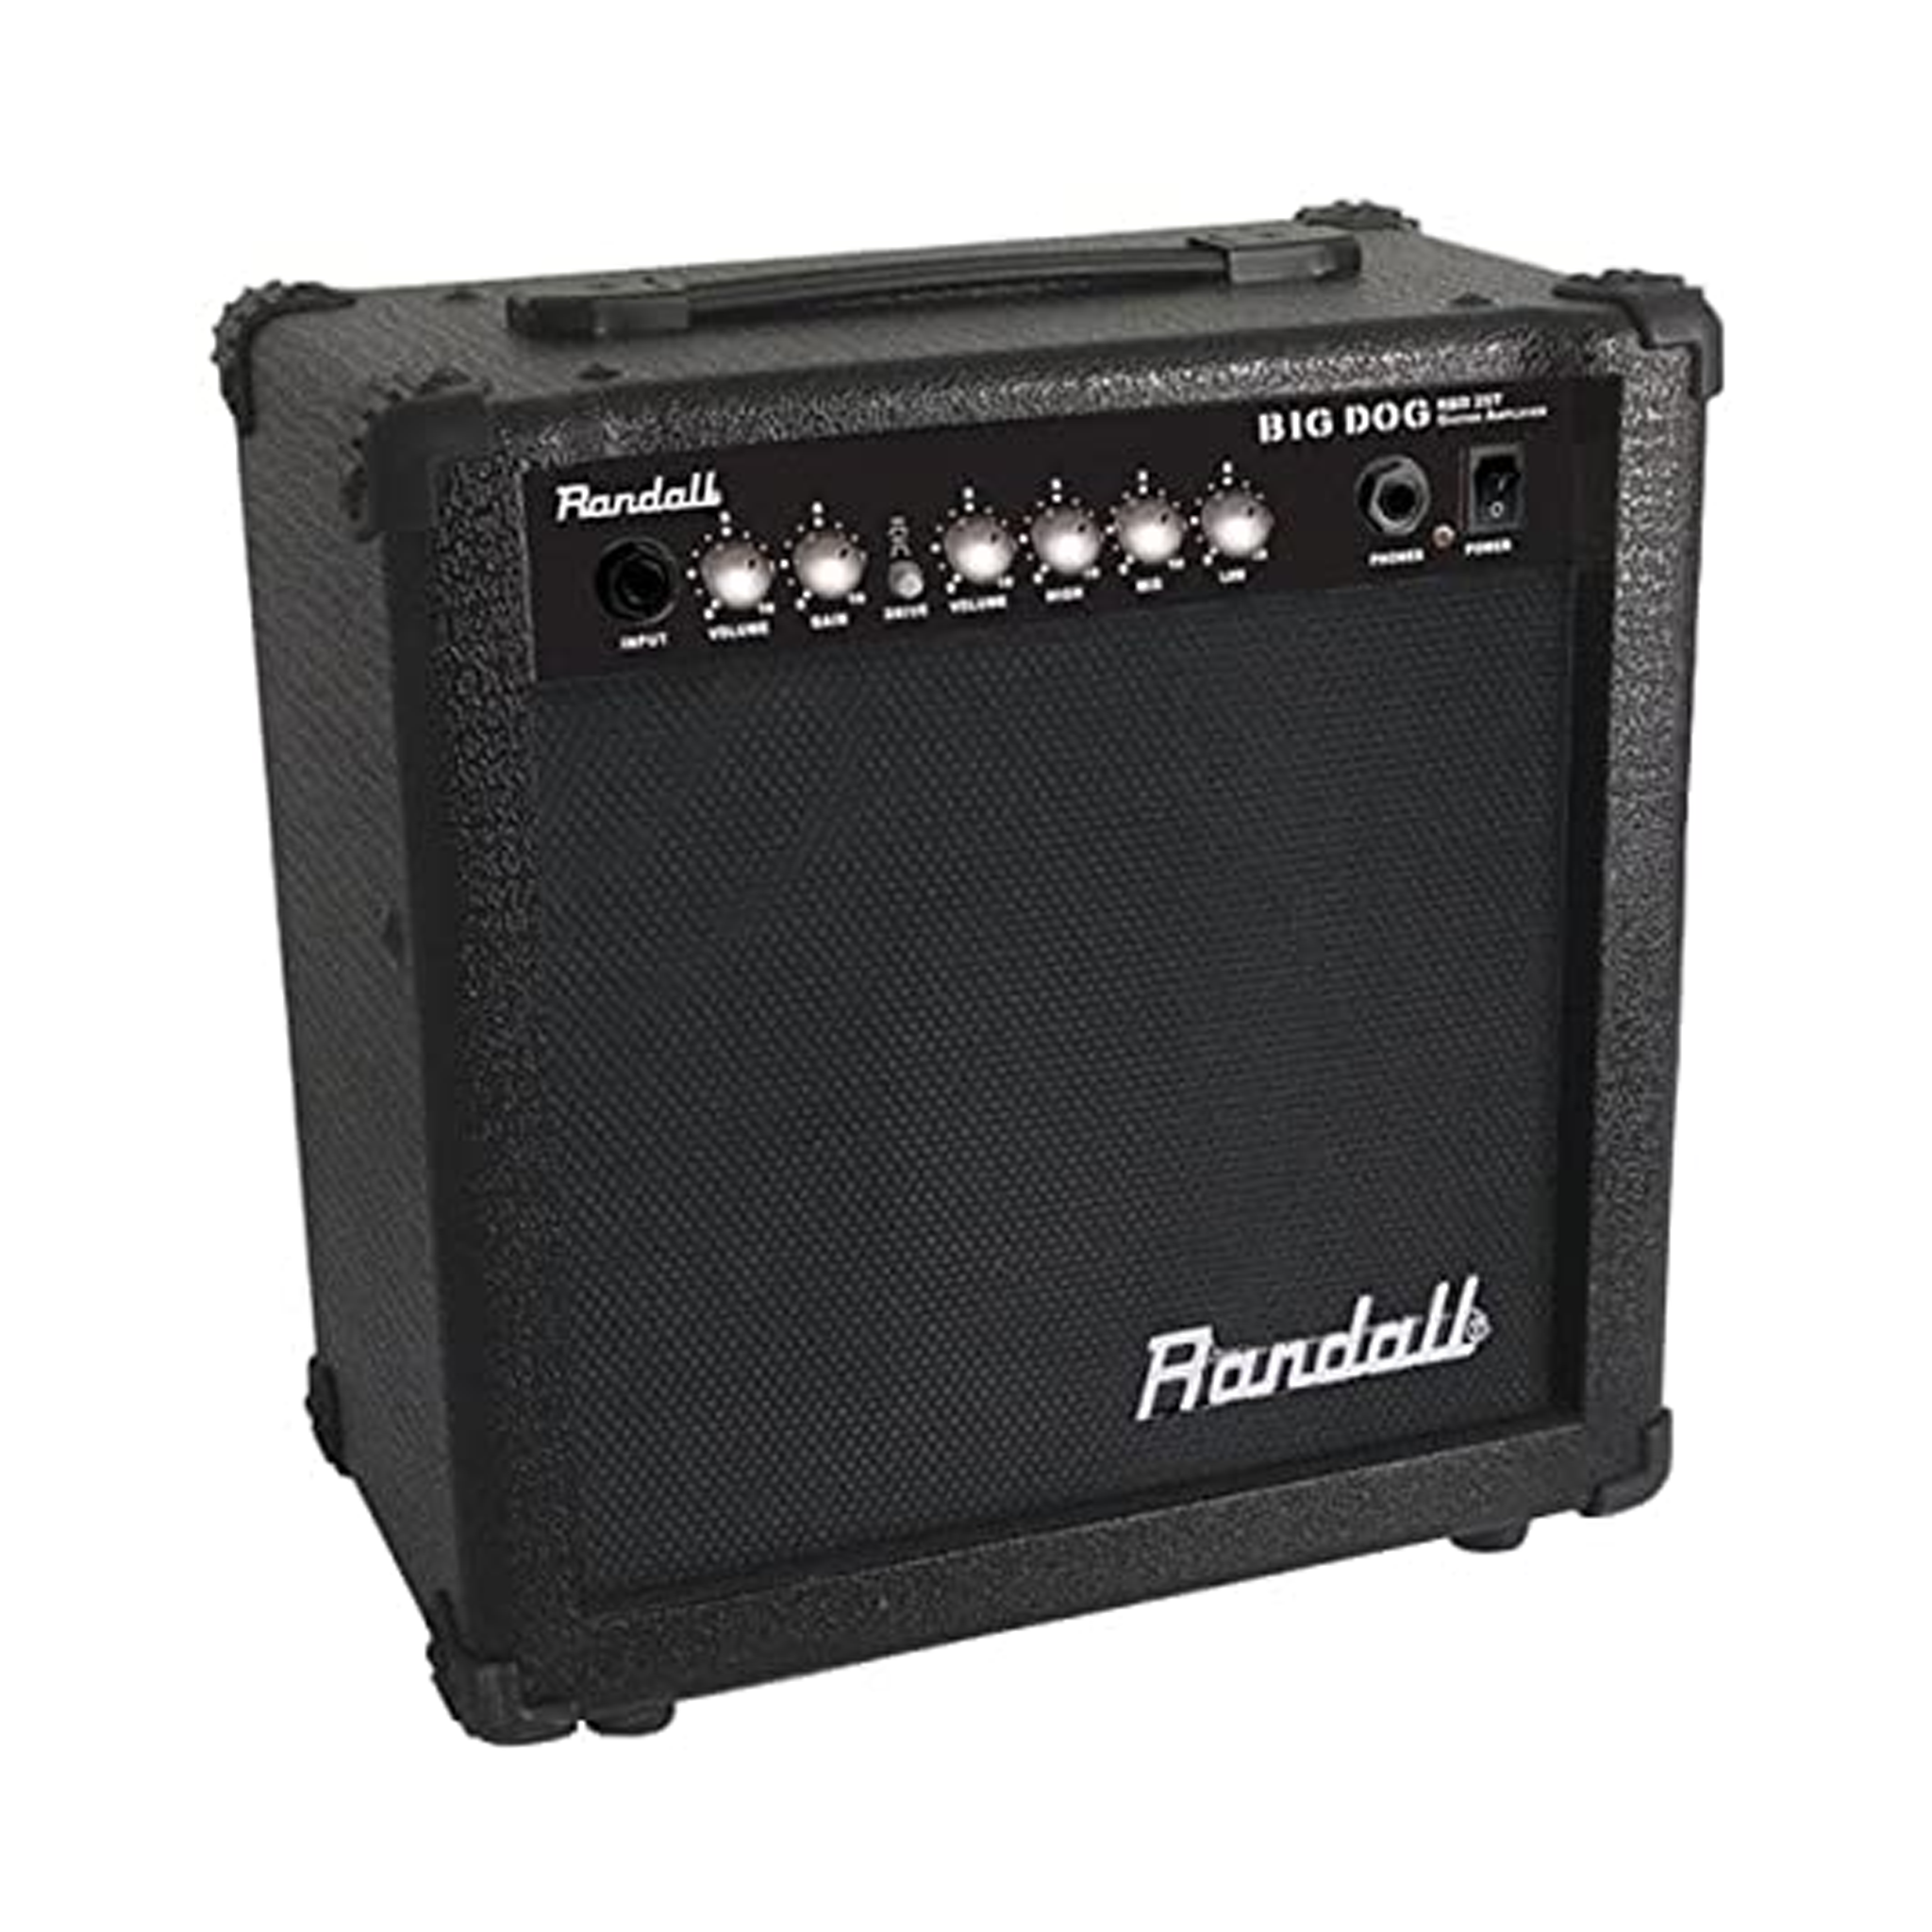 Randall RBD15 Big Dog Guitar Amplifier 15W